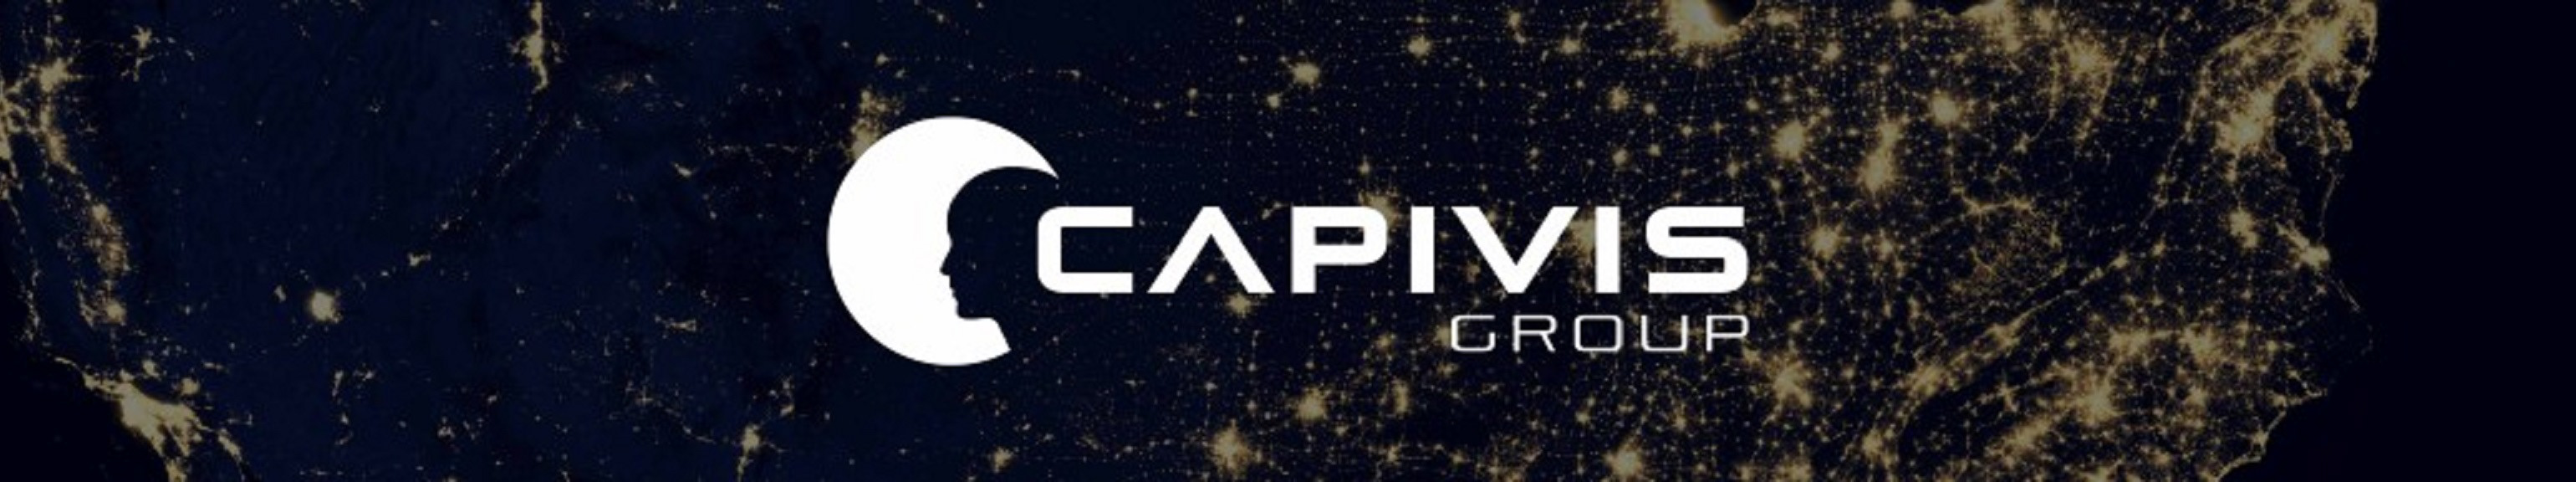 Profil-Banner von Capivis Group Business Optimization, Value Improvement & Growth Management Consulting Companies